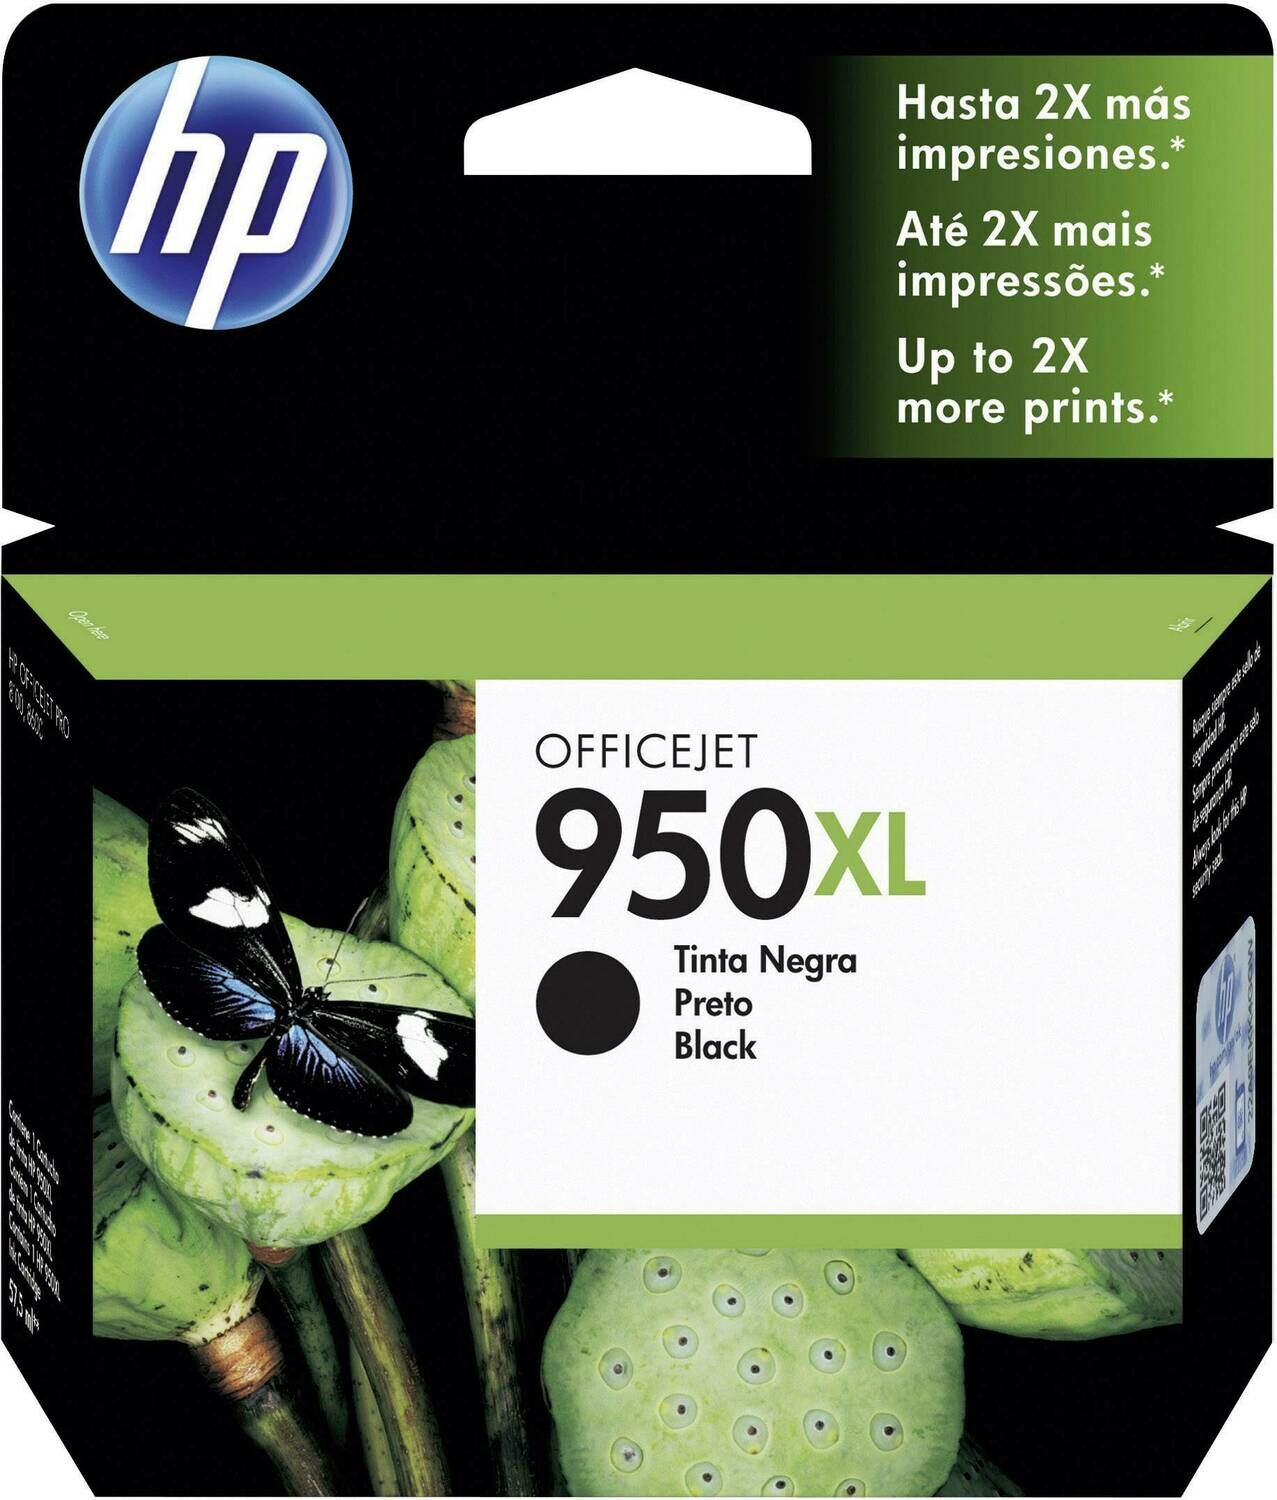 HP 950XL High Yield Black Original Ink Cartridge (CN045AE)